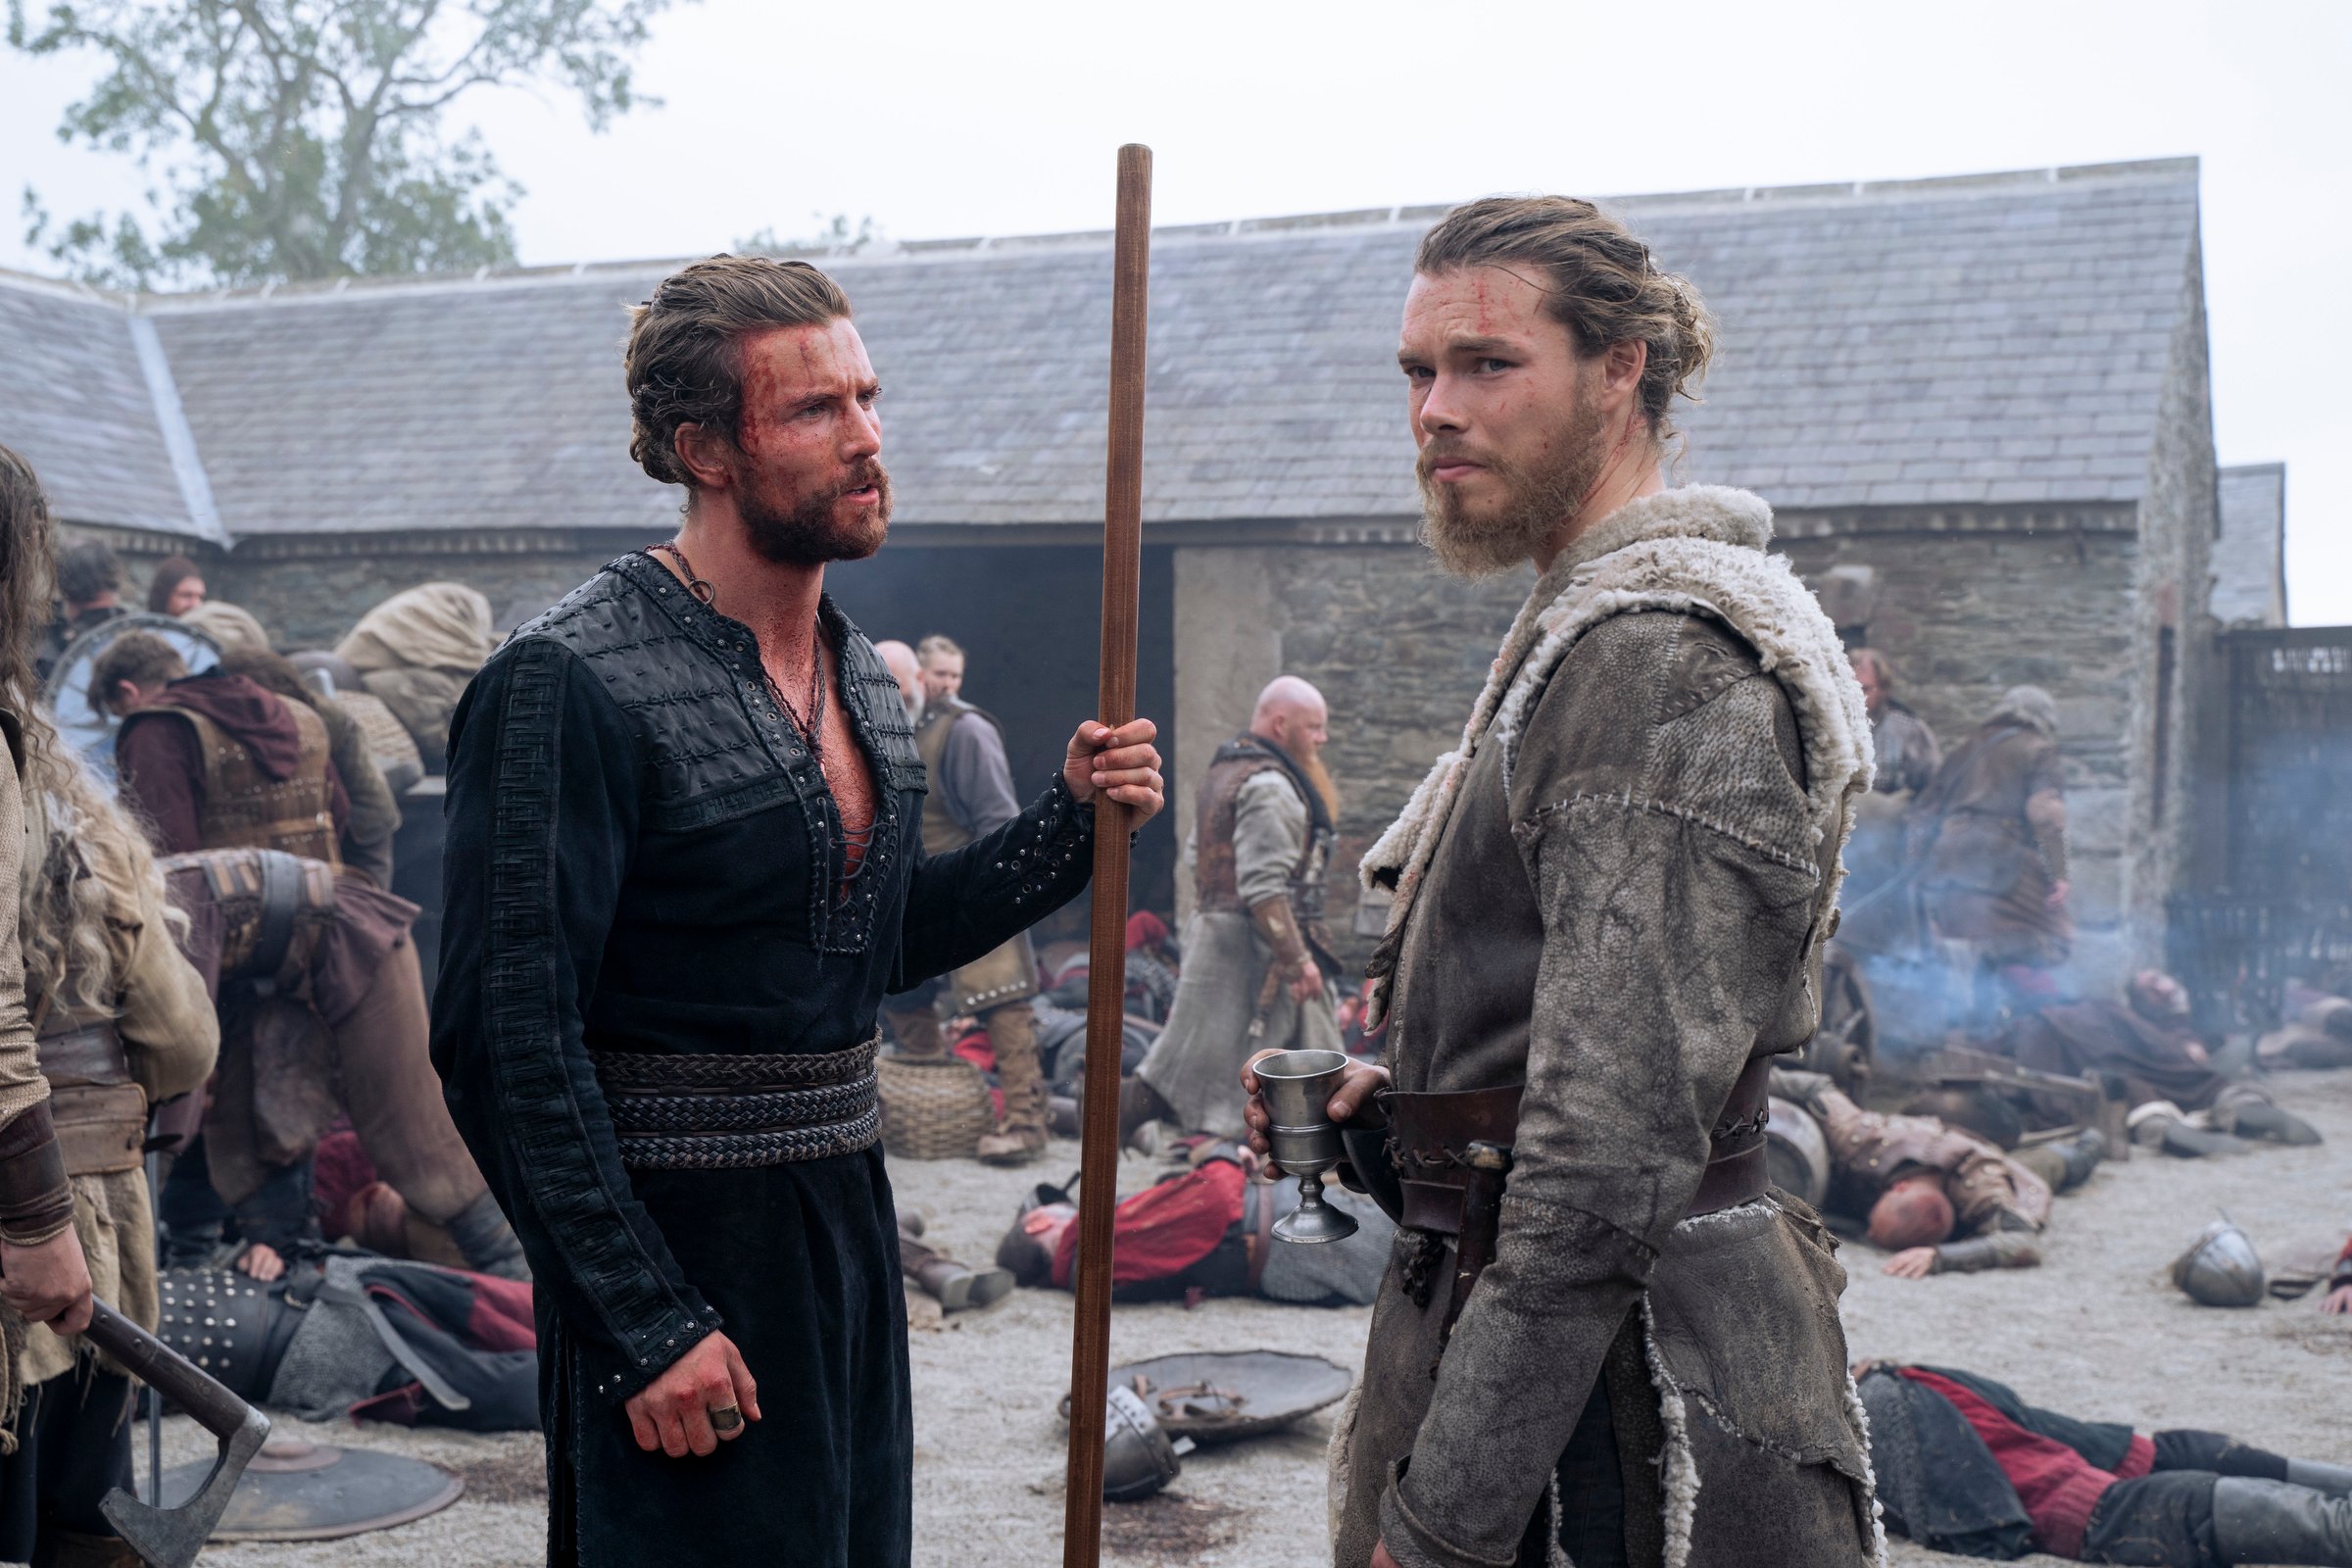 Vikings Valhalla: Bradley Freegard & Jóhannes Jóhanesson Bring Brutality to  History